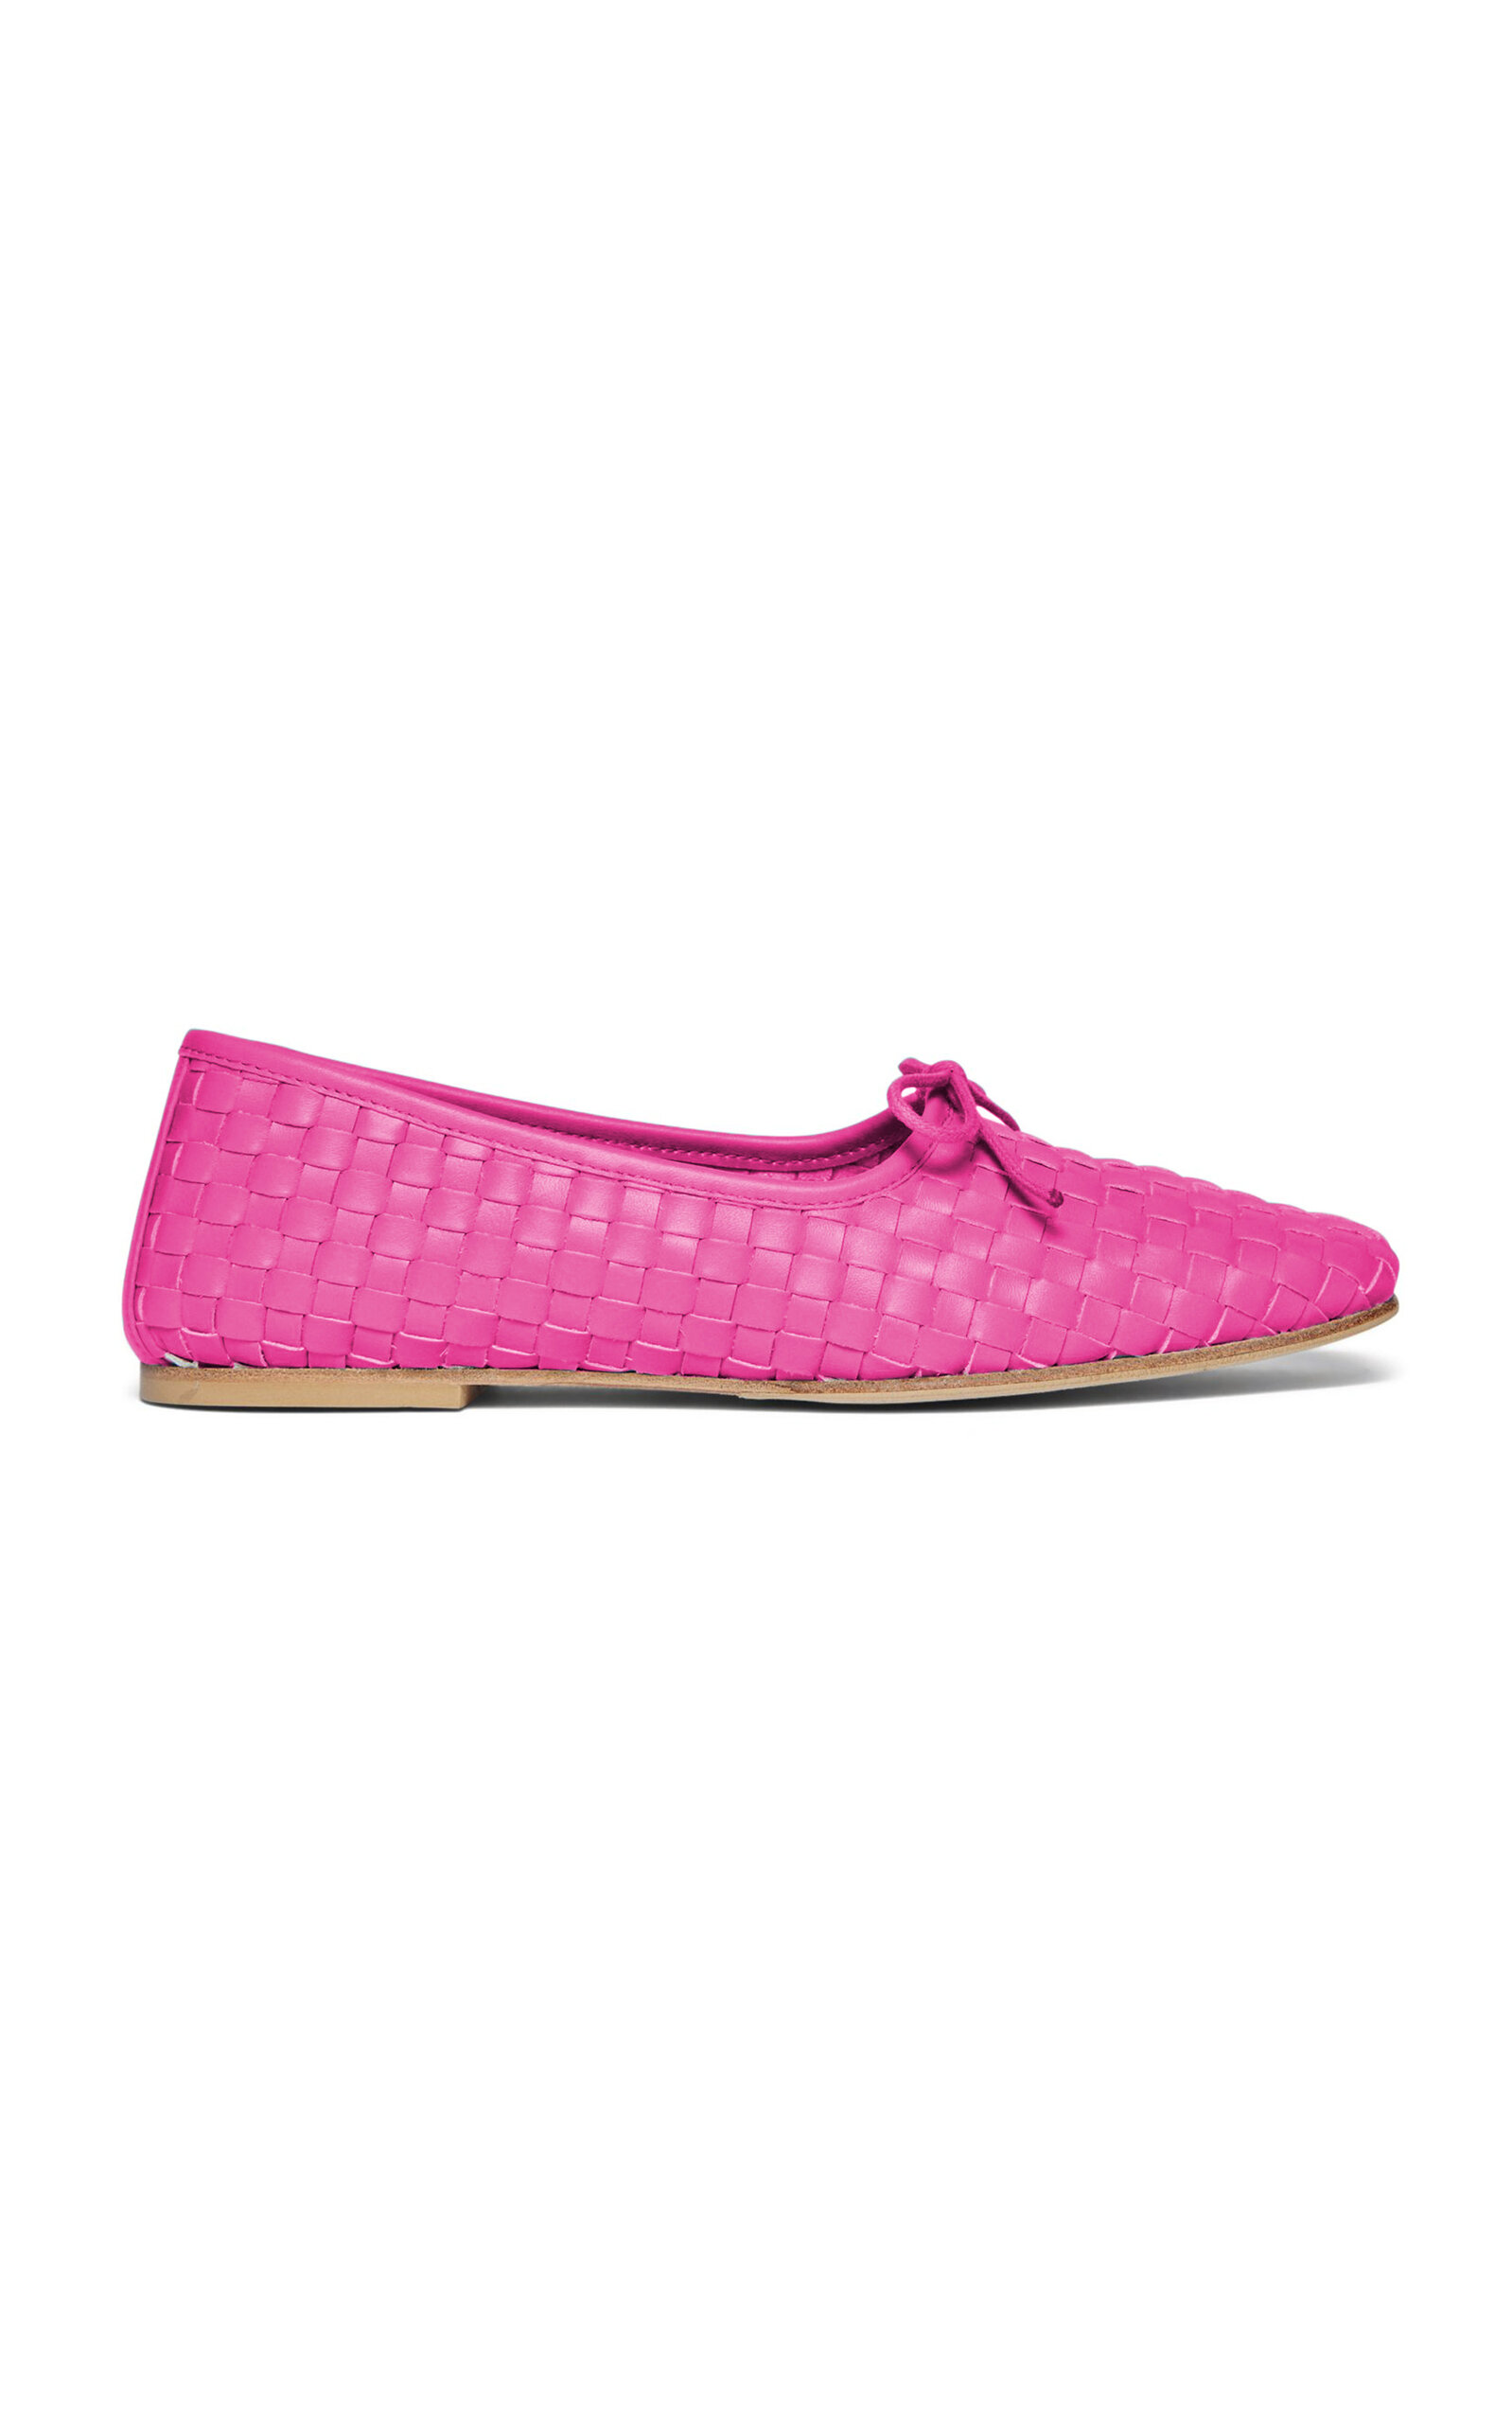 Freda Salvador Jada Leather Flats In Pink